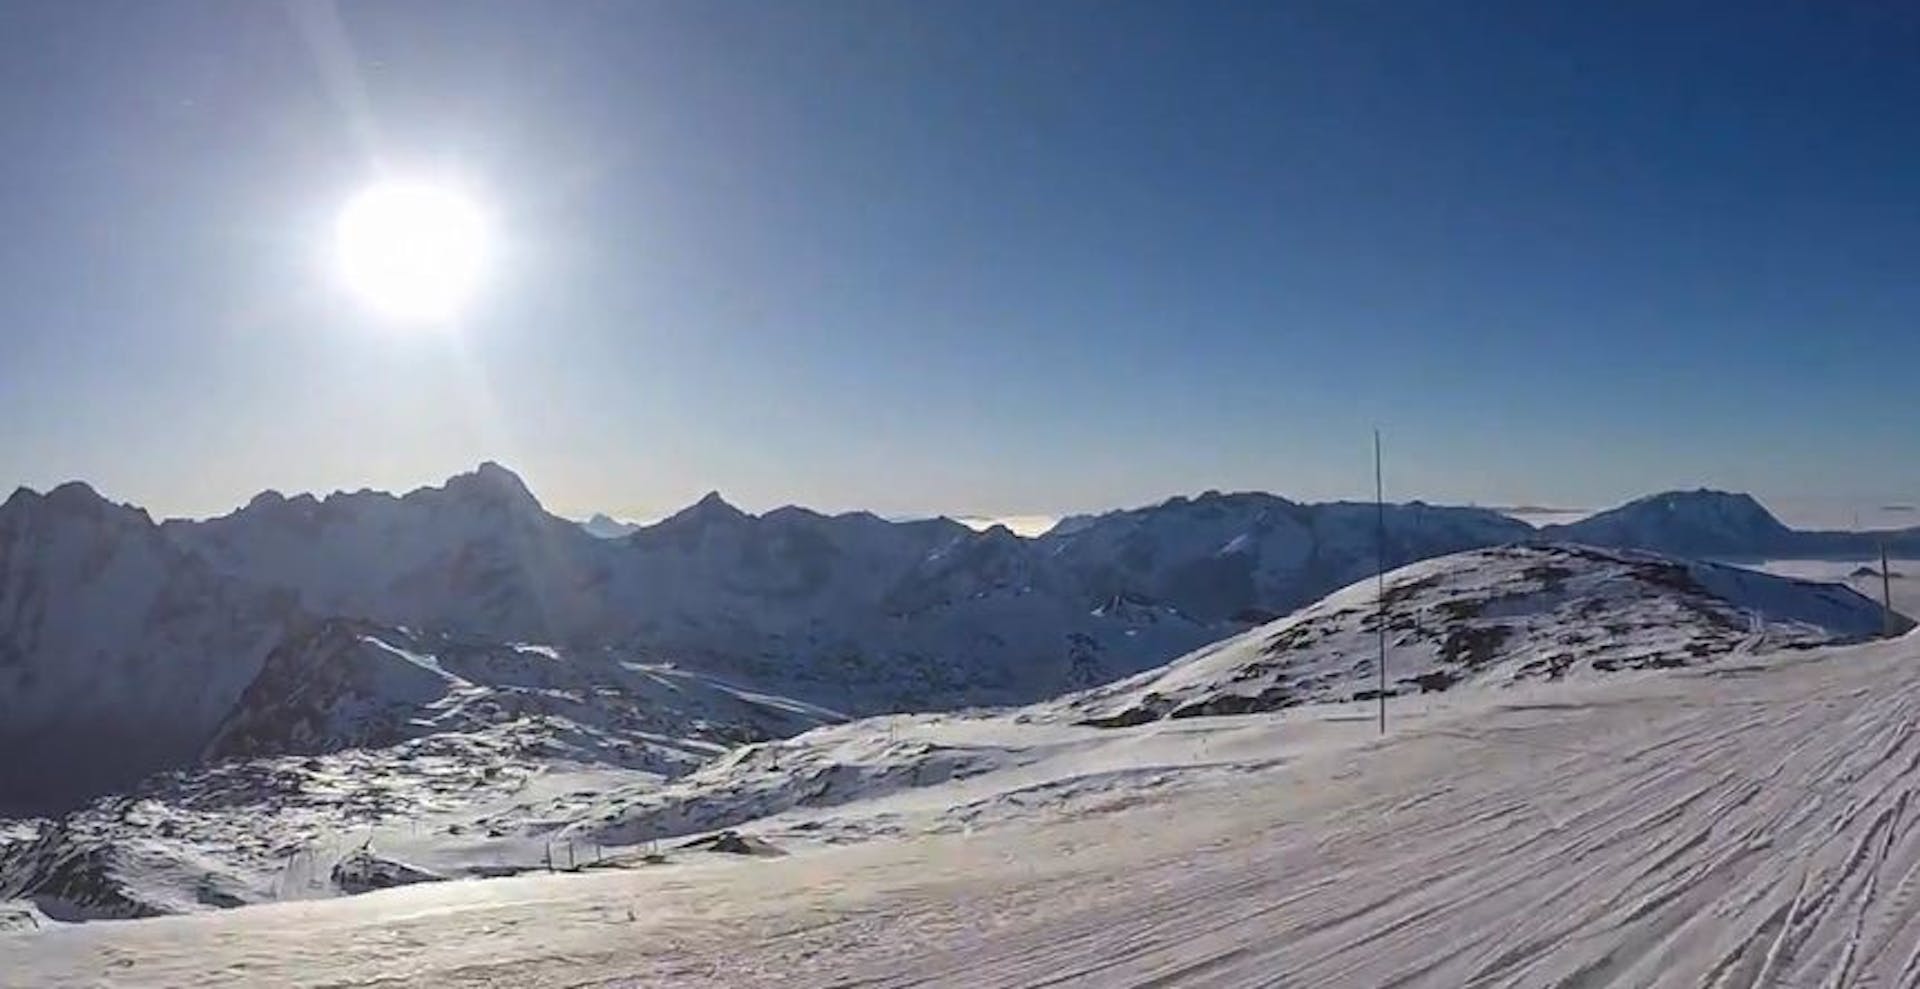 Ski snowsure slopes at Les Deux Alpes